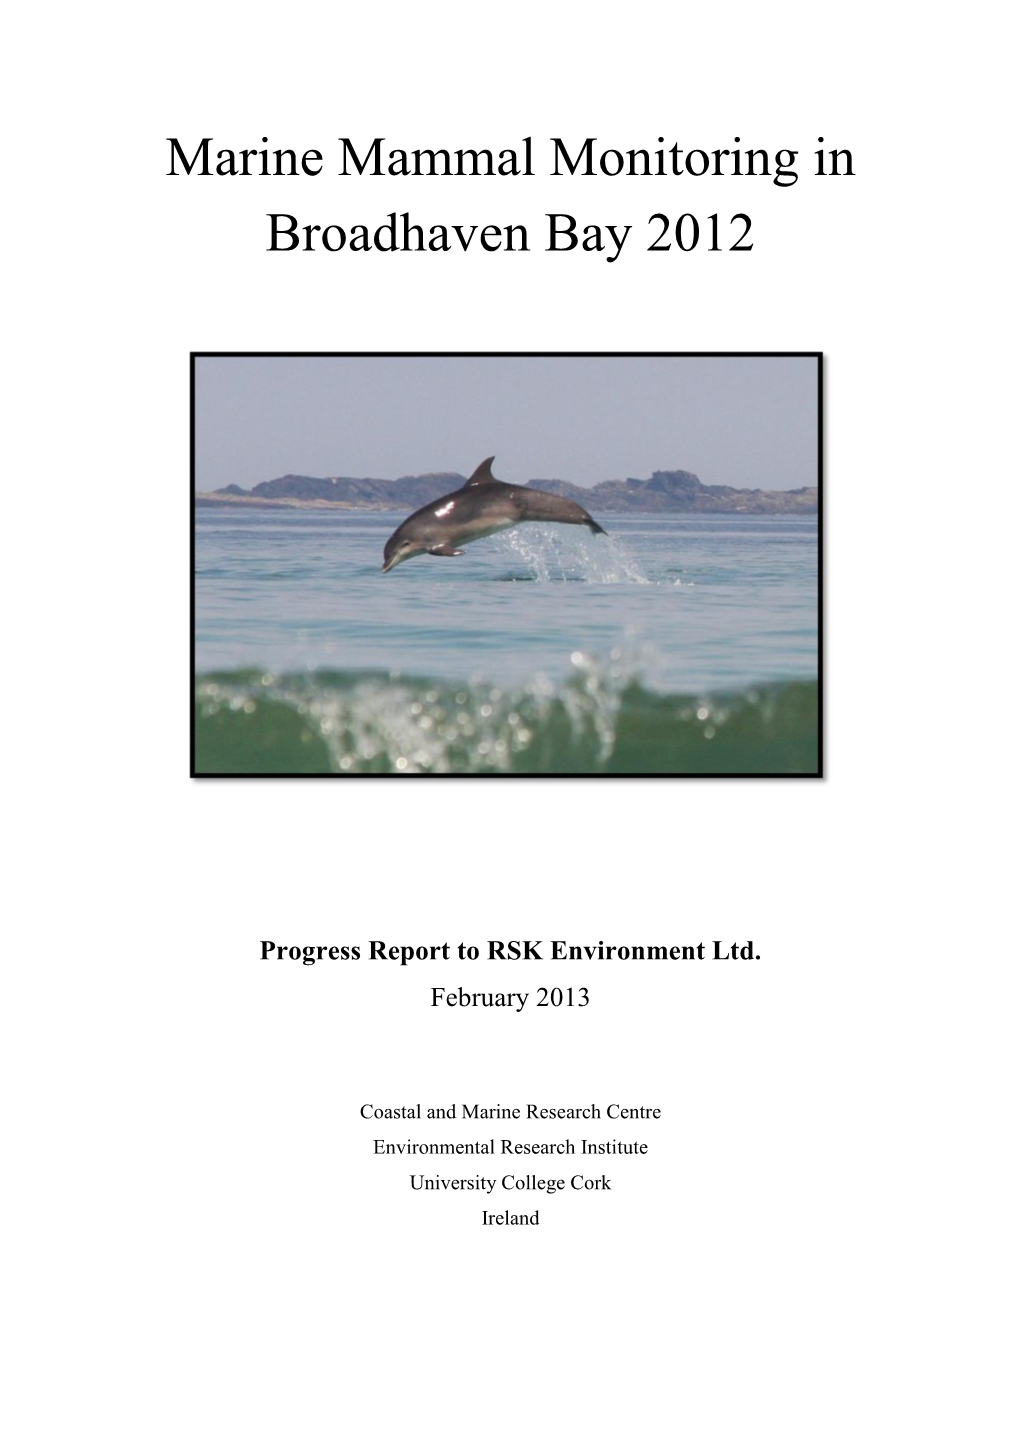 Marine Mammal Monitoring in Broadhaven Bay 2012